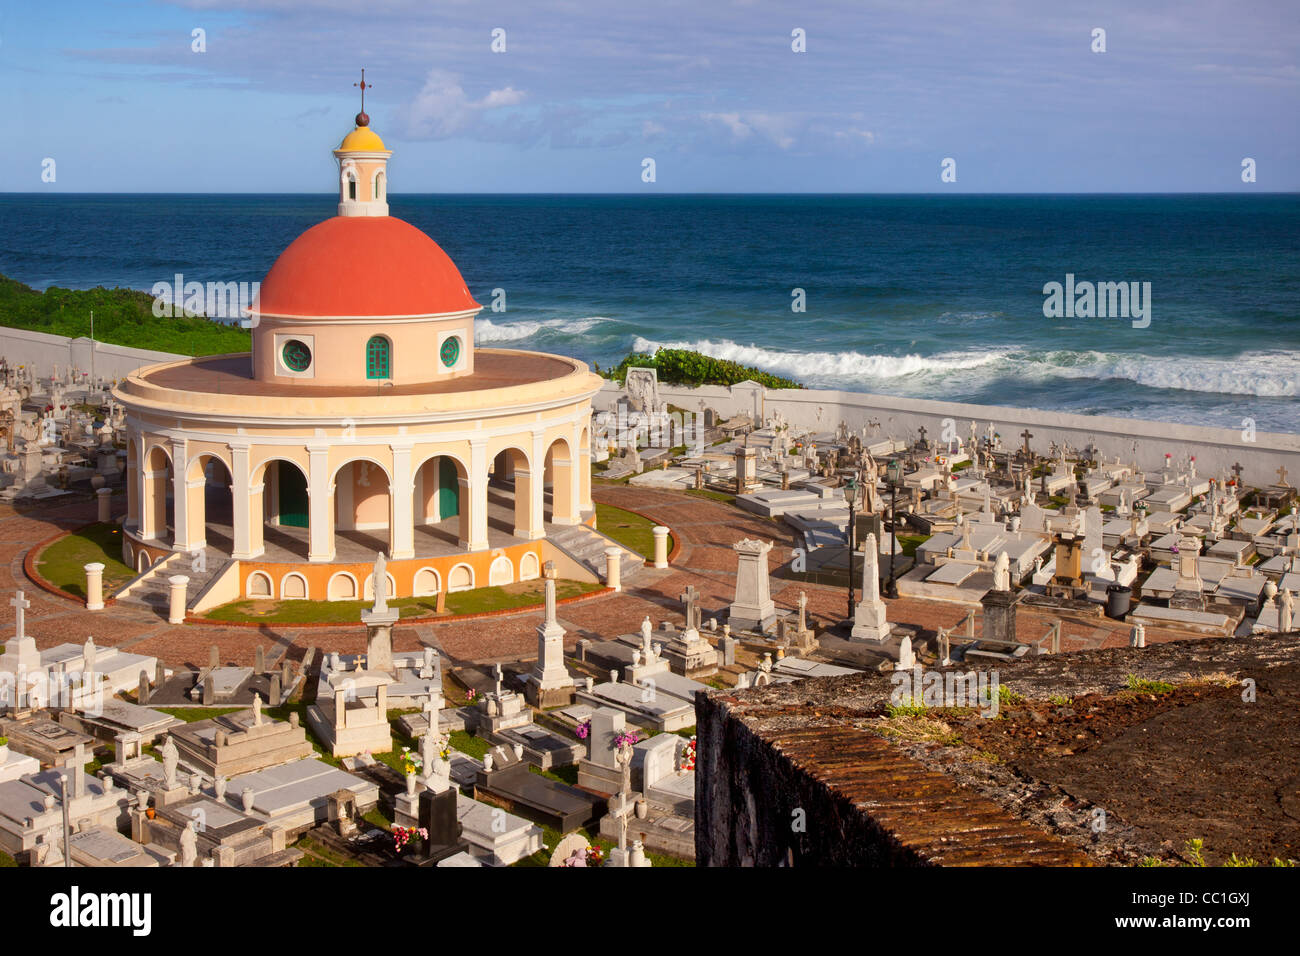 Early morning over historic Santa Maria Magdalena de Pazzis cemetery in old town San Juan Puerto Rico Stock Photo